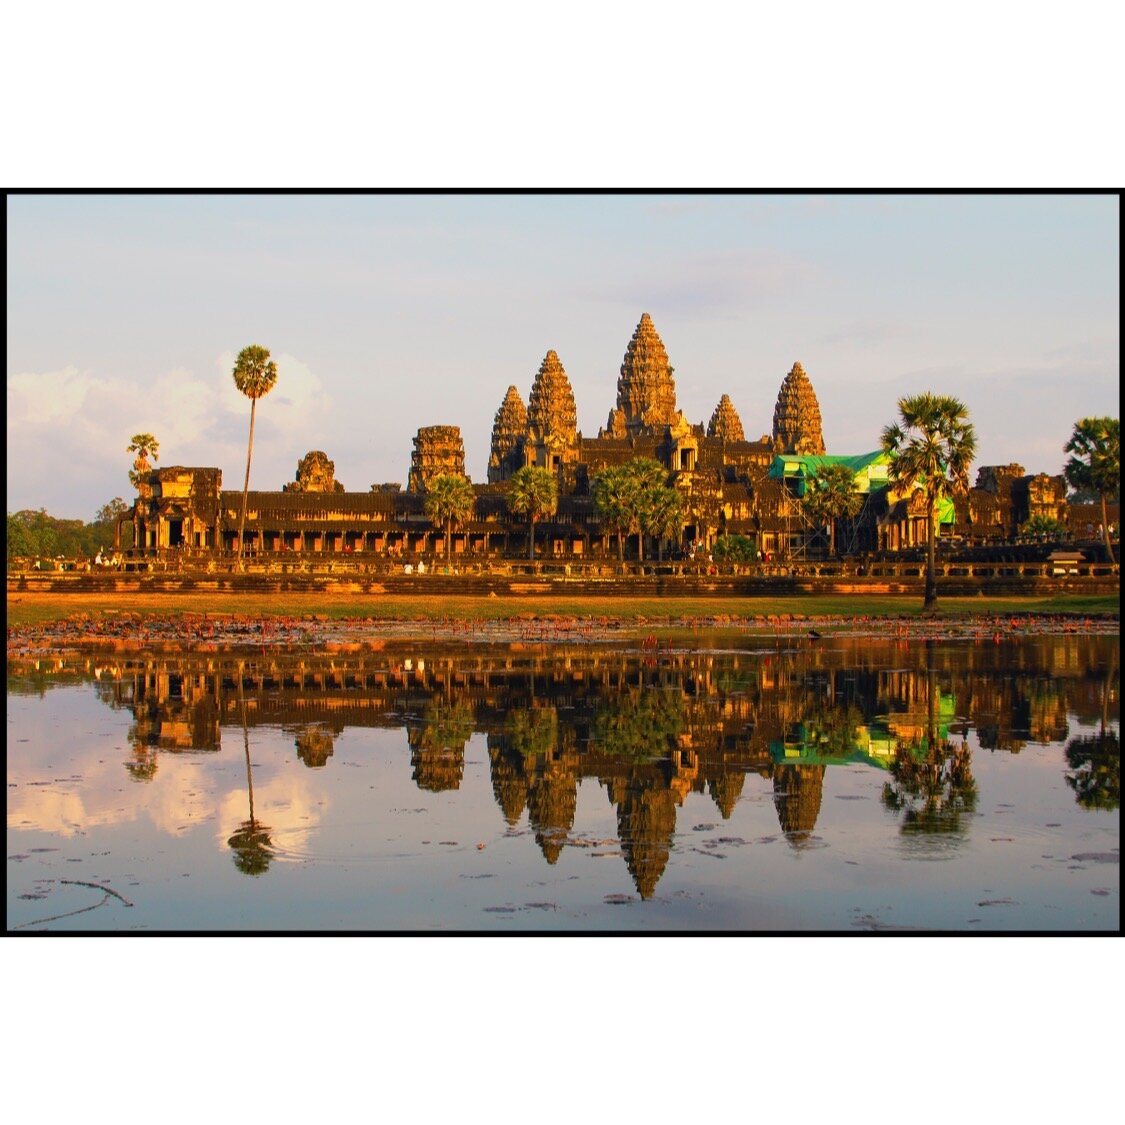 'Angkor Wat' 2013 © Ave Pildas 